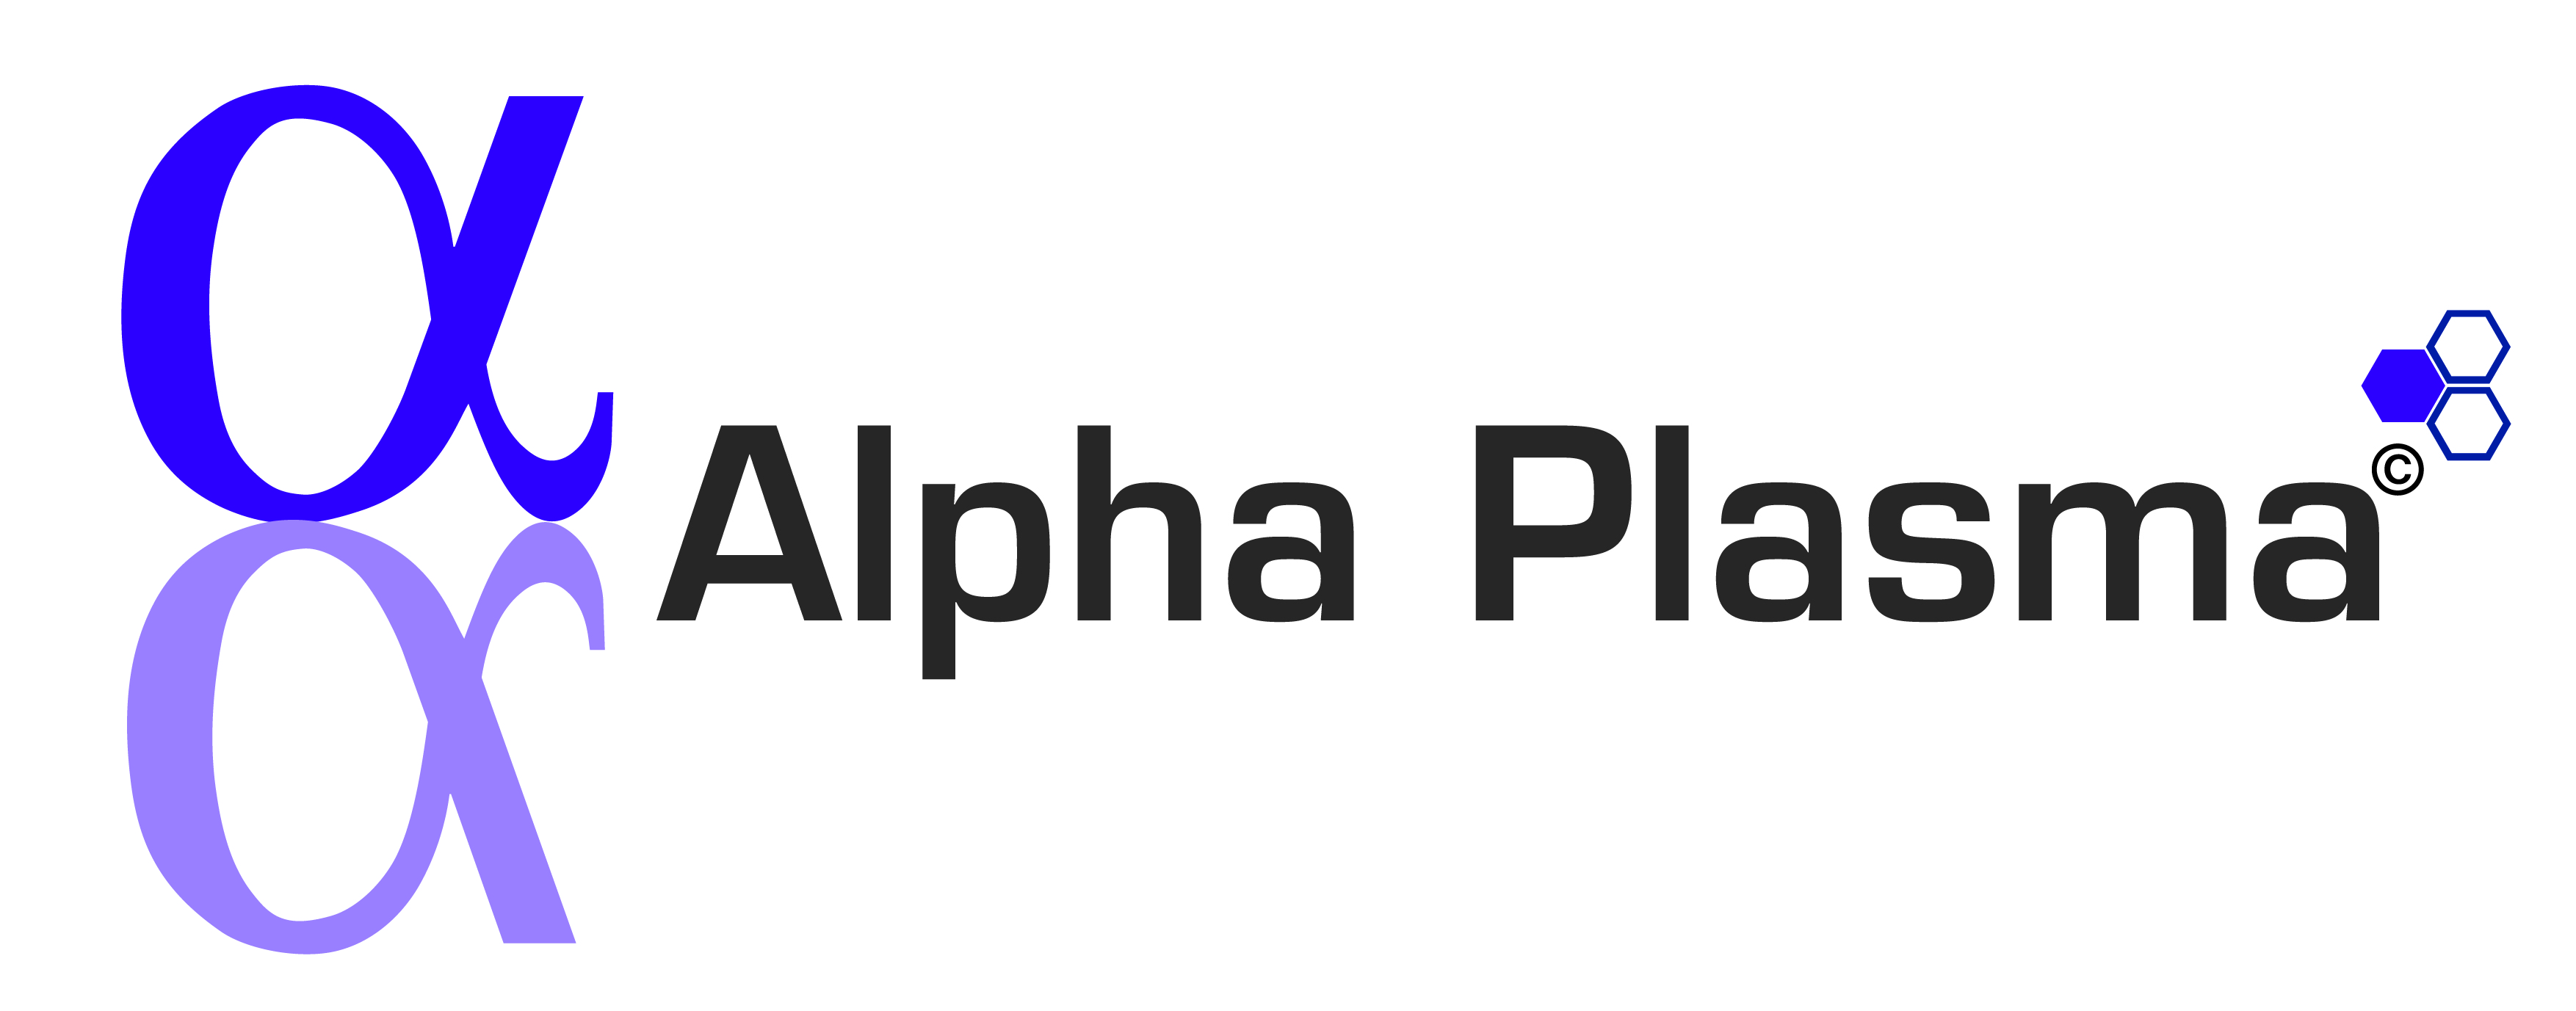 AlphaPlasma_LOGO